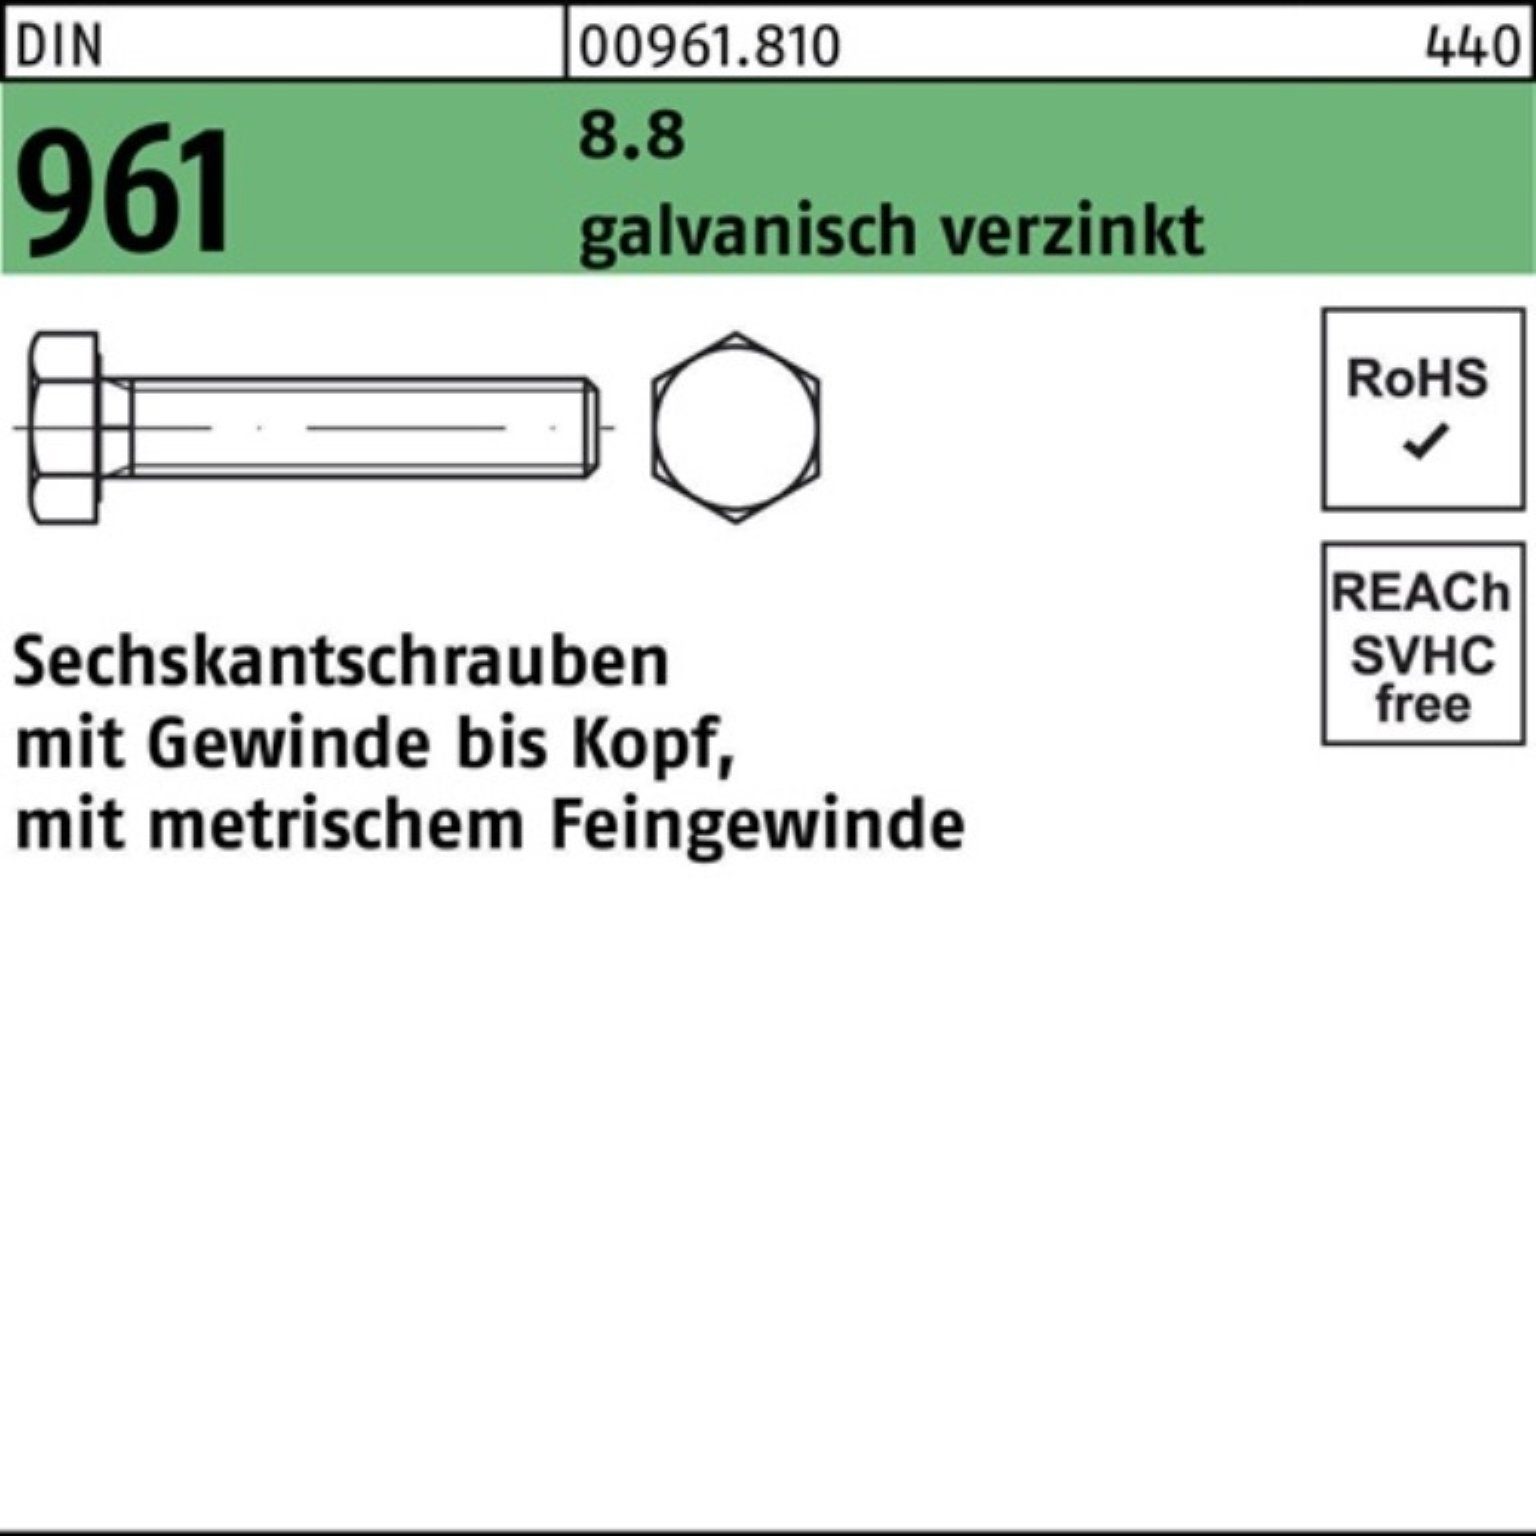 Sechskantschraube Pack 961 VG 100er 50 Sechskantschraube 8.8 DIN galv.verz. 65 Reyher M12x1,25x